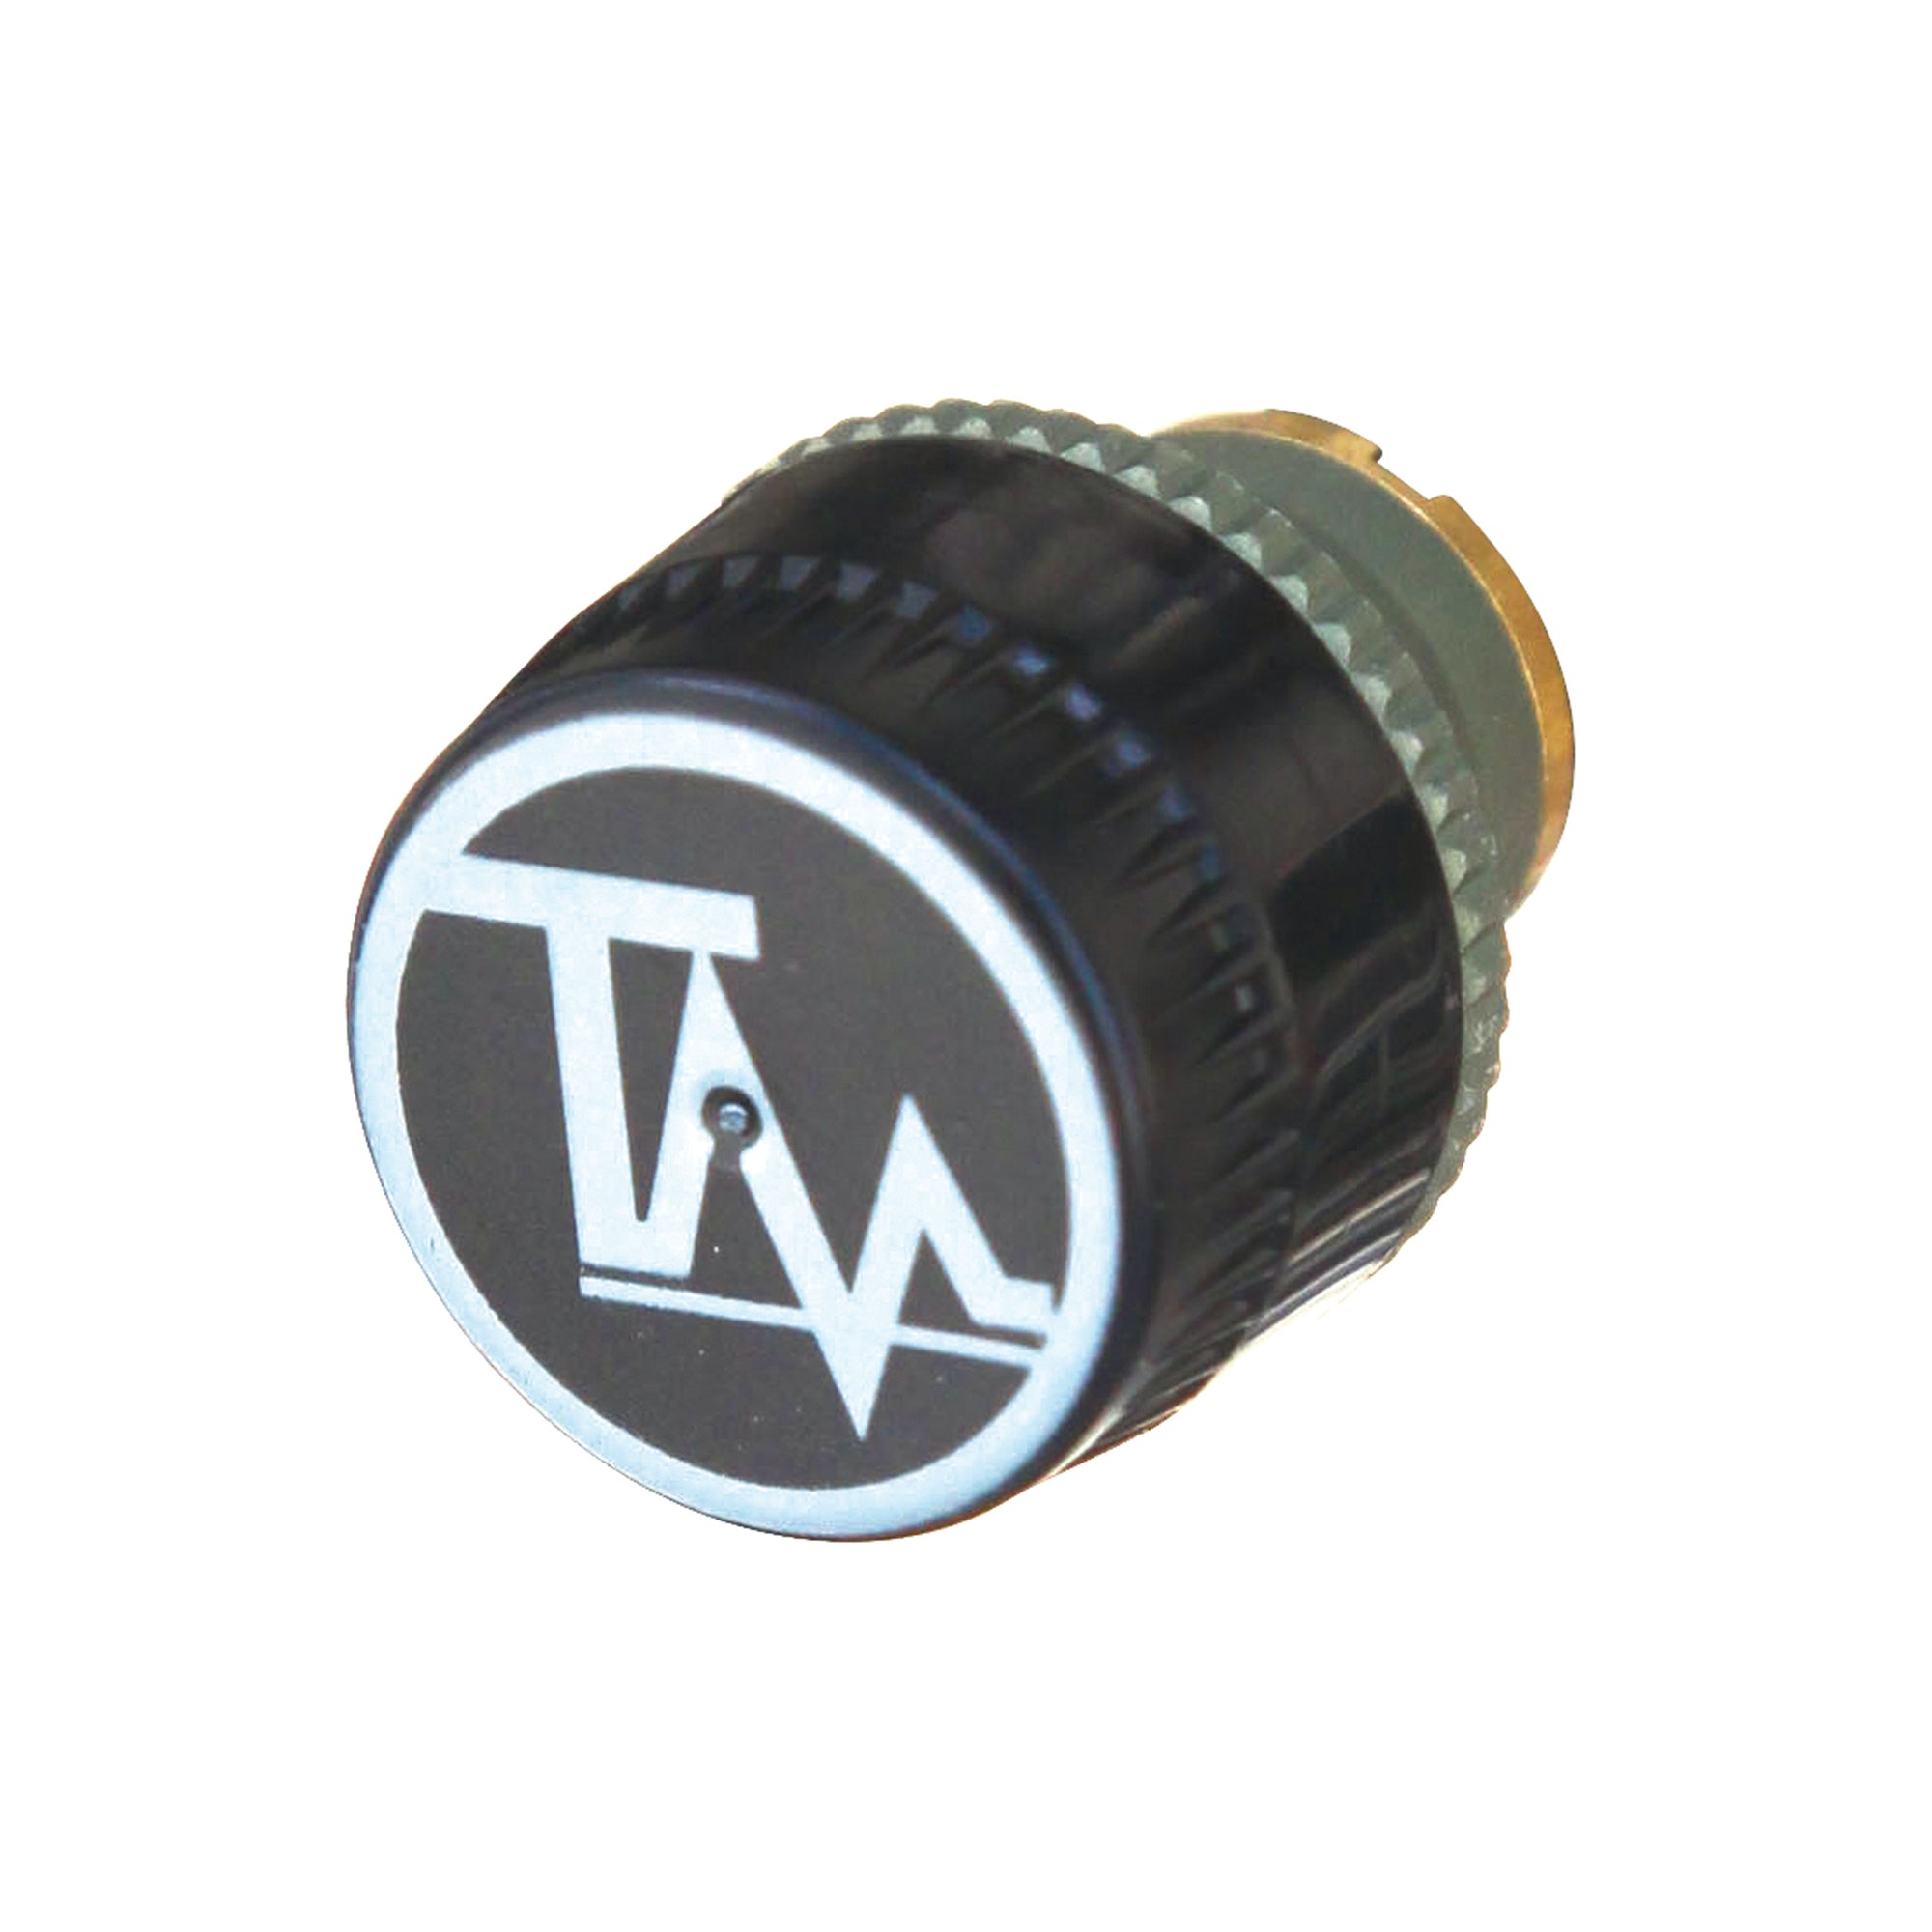 Minder TM-2BRASS Tire Pressure Transmitters - Brass Transmitter, 2 Pack